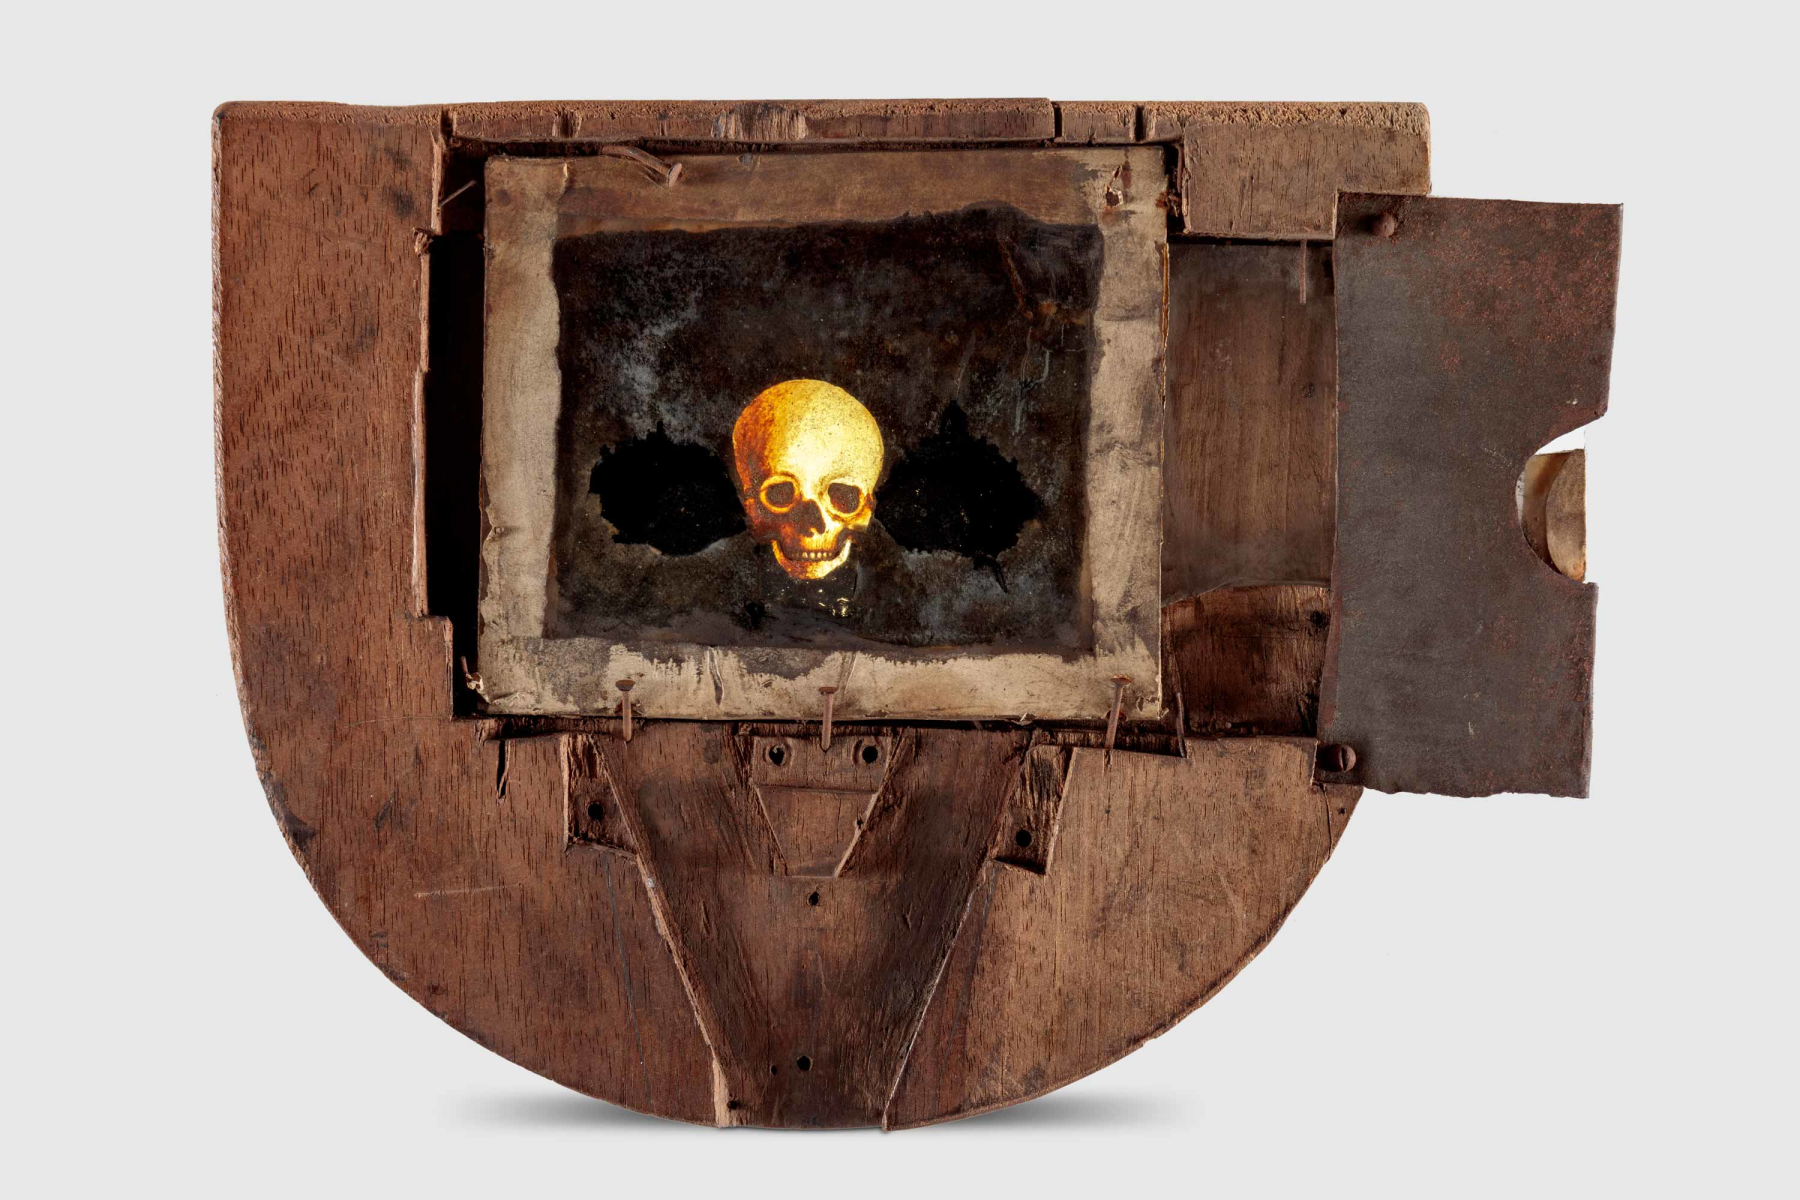 Phantasmagoria magic lantern slide depicting skull, Gift of Akram Miknas, and Museum Purchase, ©Academy Museum Foundation, Photo by Joshua White Photography/JW Pictures.